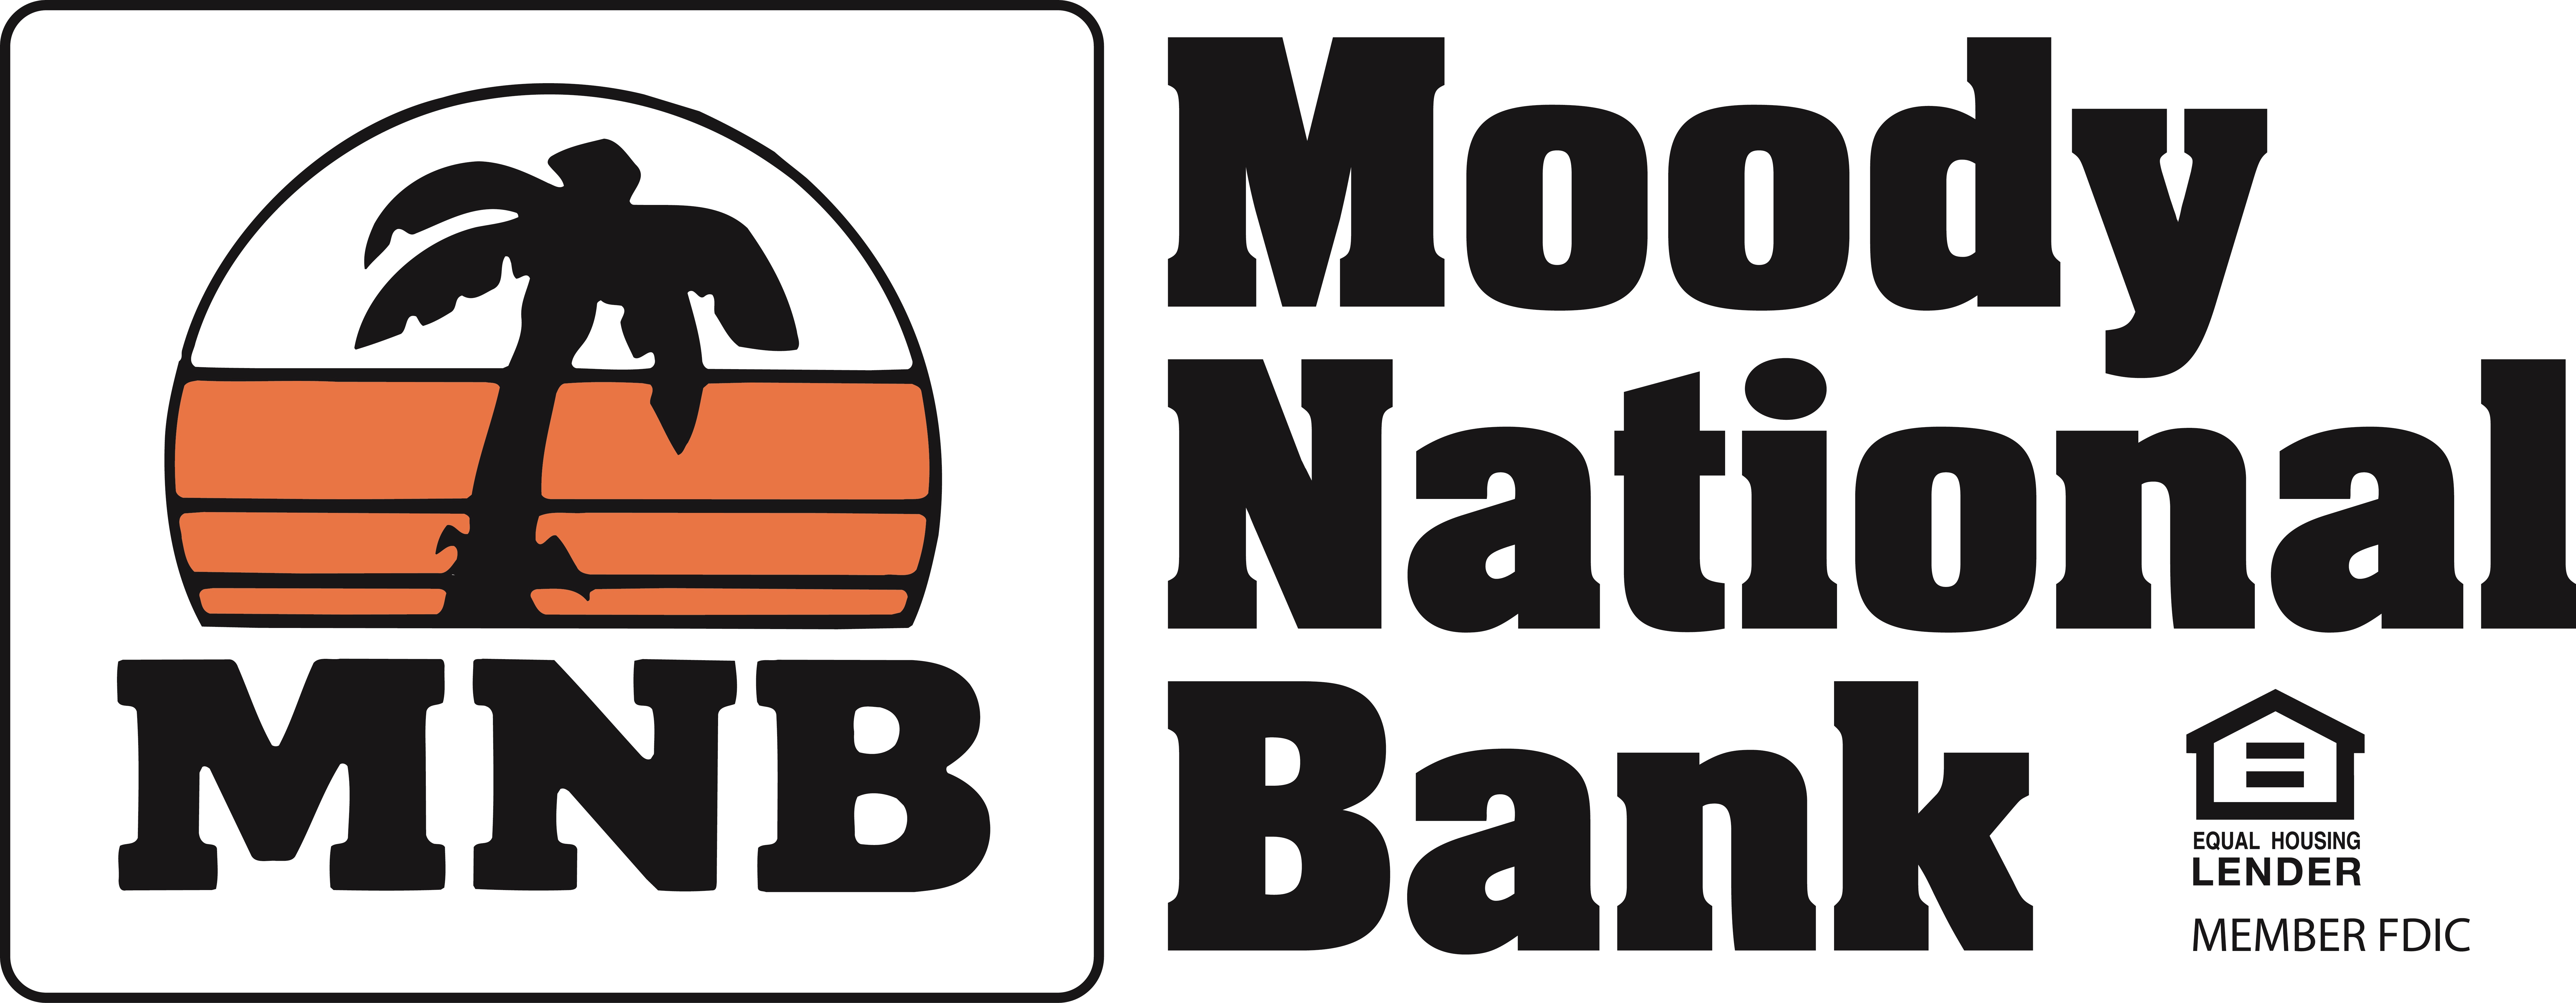 Click Here... Moody National Bank